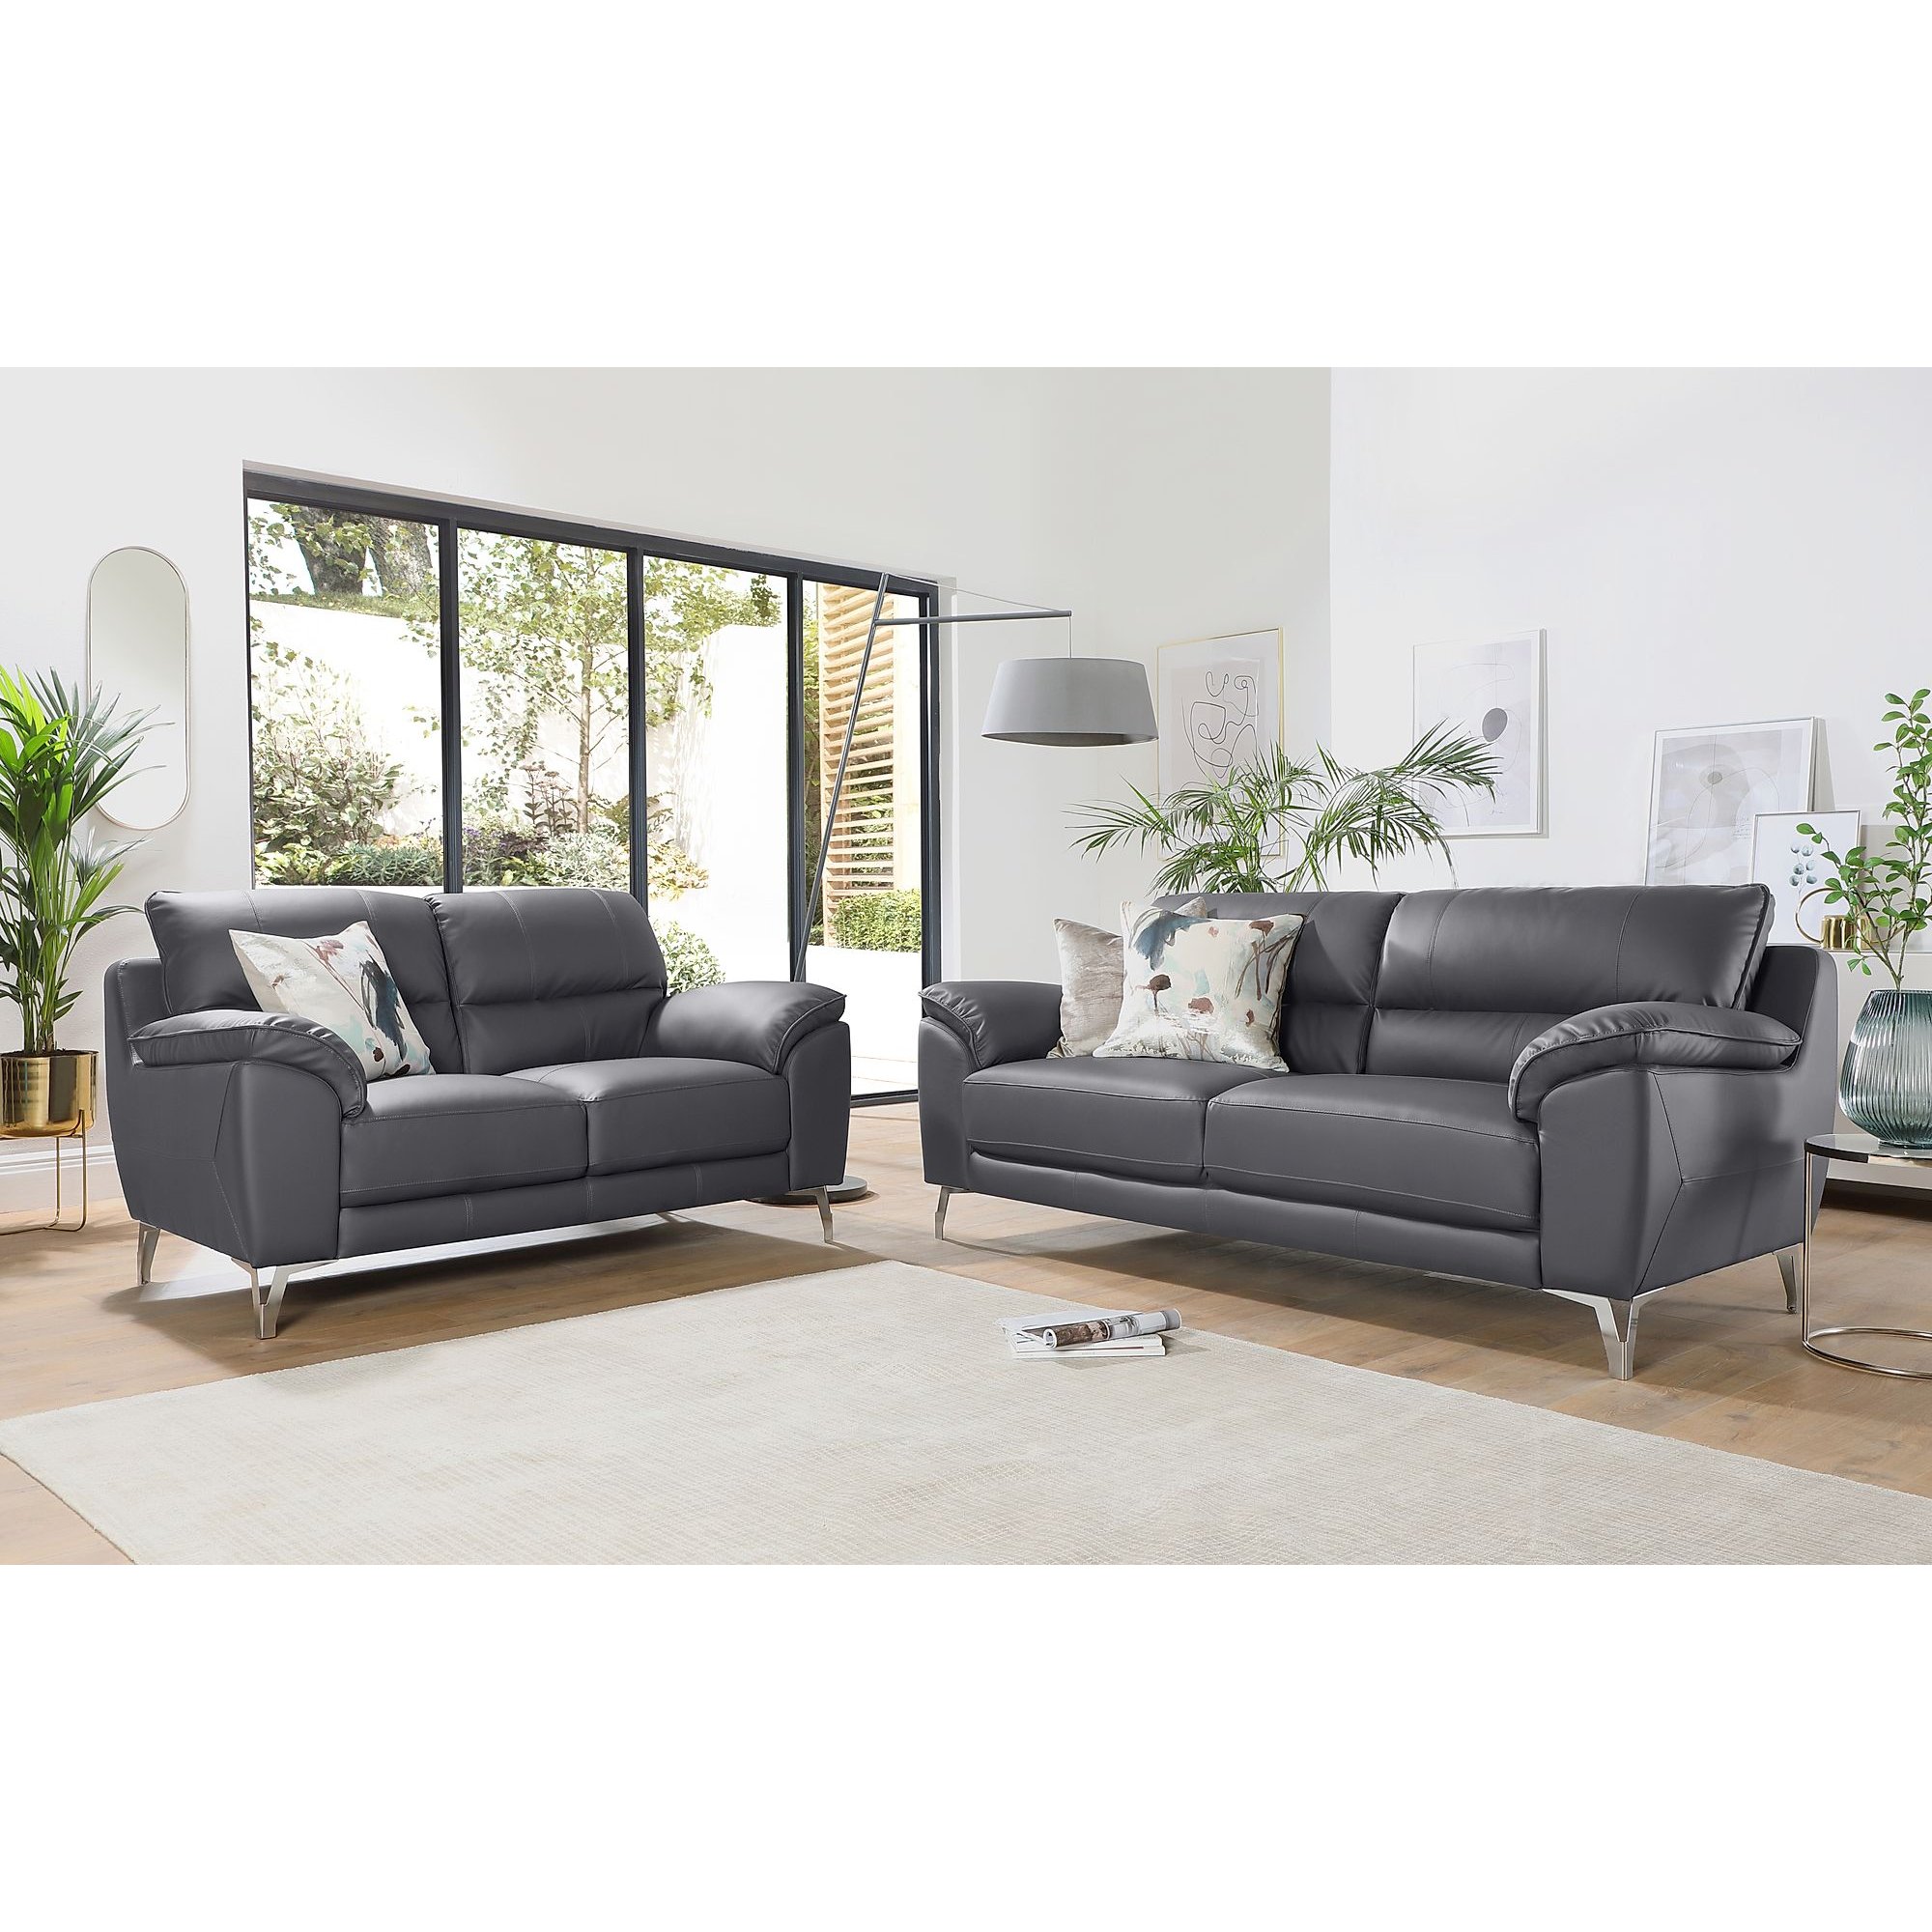 Madrid Grey Leather 3+2 Seater Sofa Set